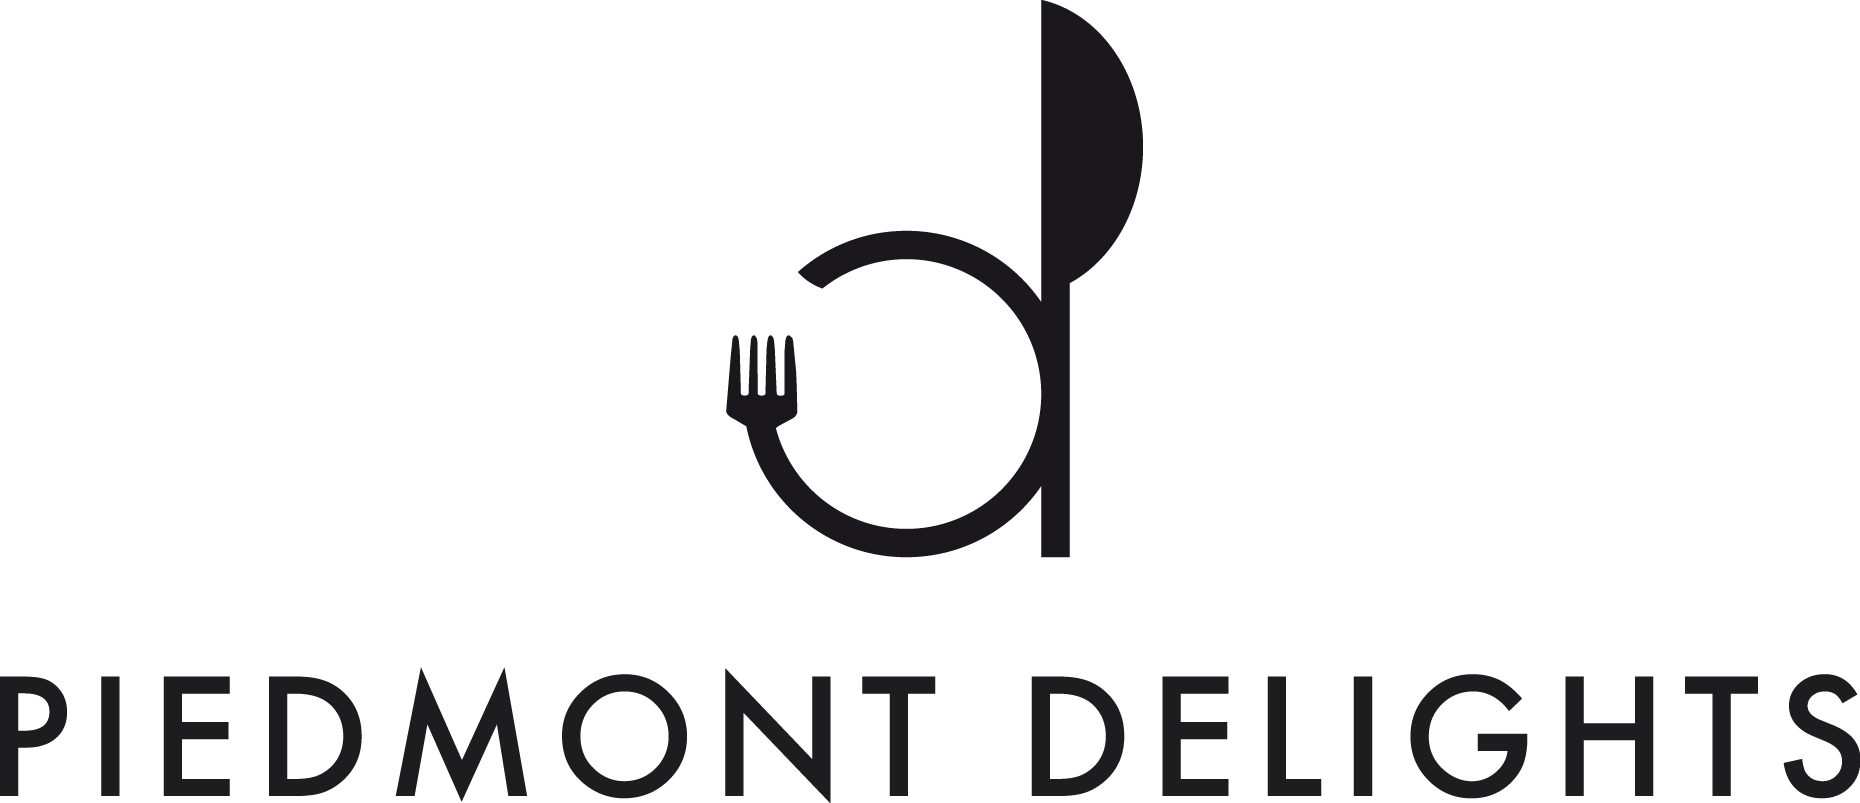 Piedmontese Logo - Piedmont Delights | Online Sale of Typical Piedmont Food and Wine